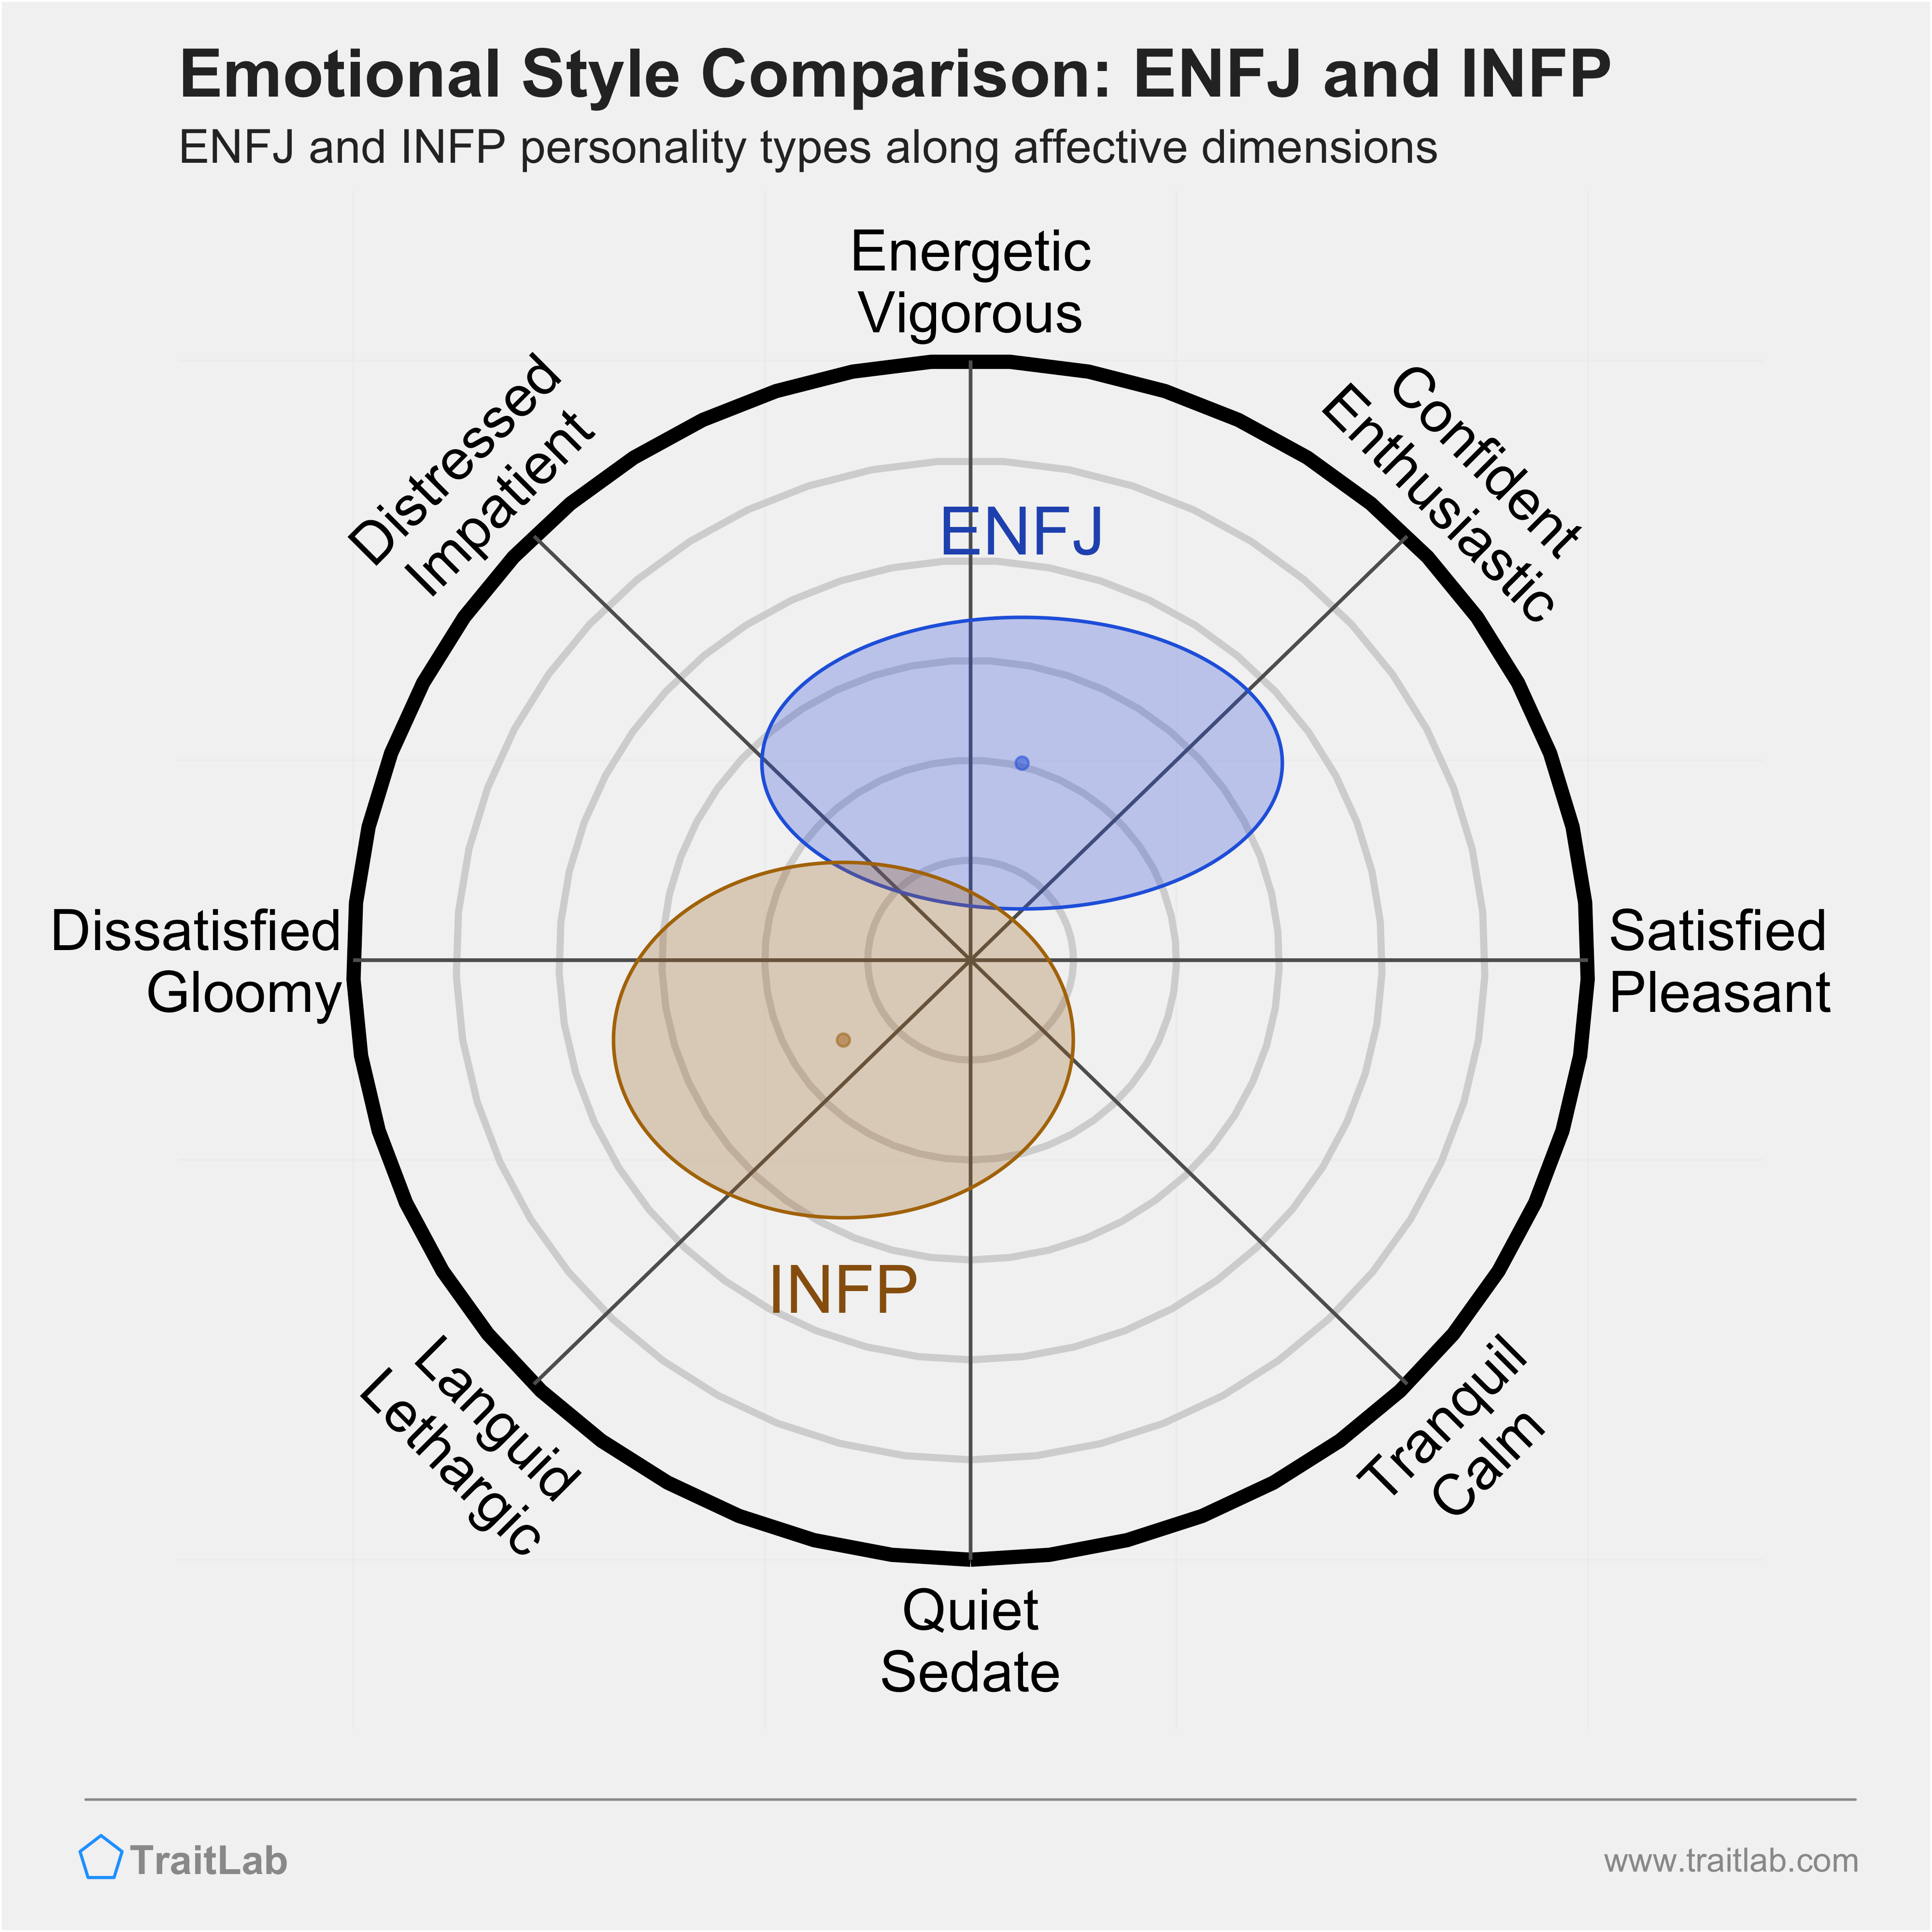 ENFJ and INFP comparison across emotional (affective) dimensions